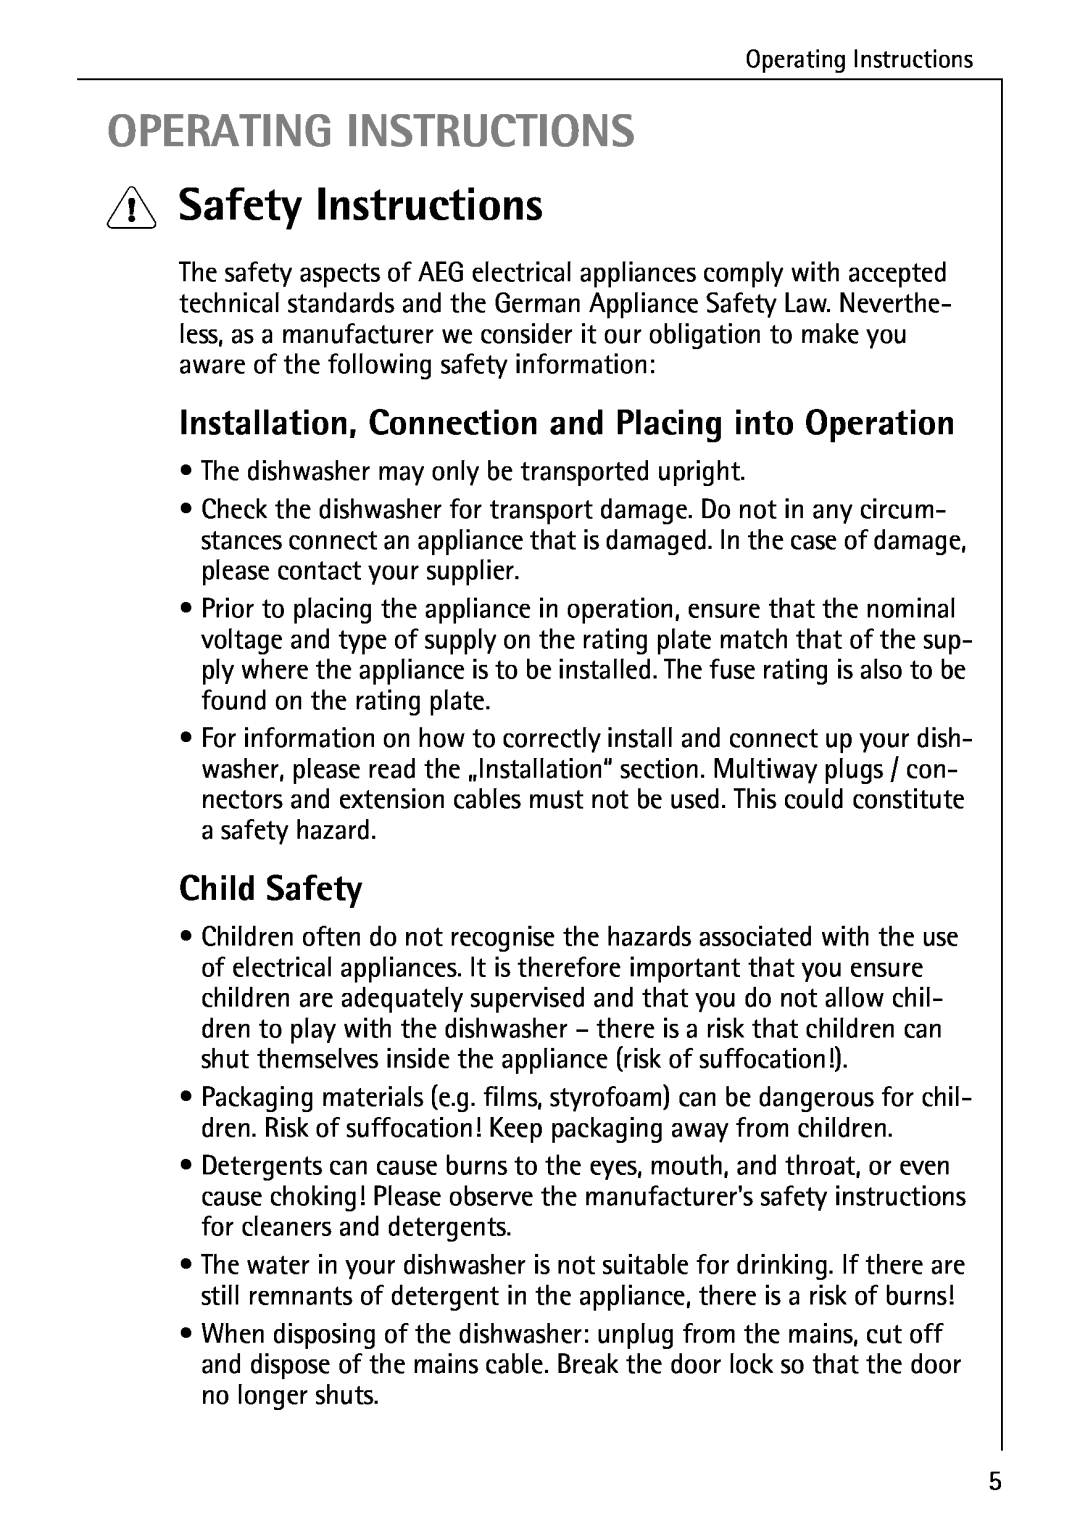 AEG 50800 manual Operating Instructions, 1Safety Instructions, Child Safety 